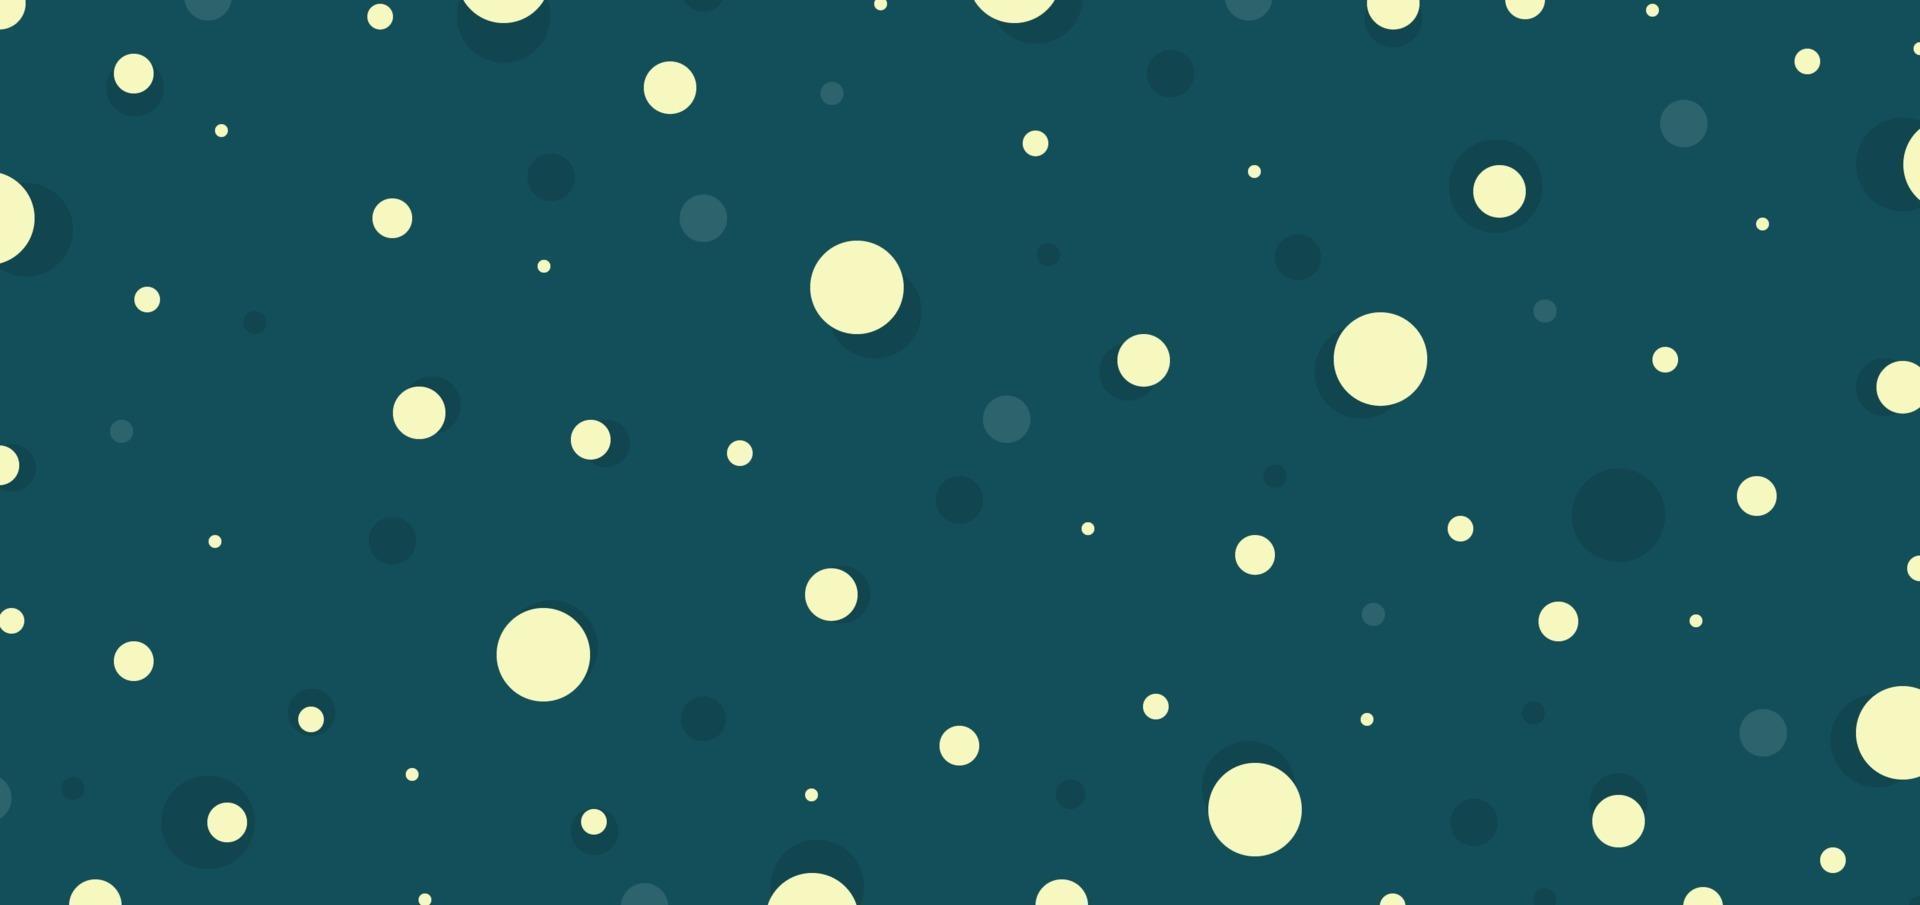 Blue dots pattern background, Geometric circles dotted polka dot print for textile, scrapbook paper, wallpaper, etc